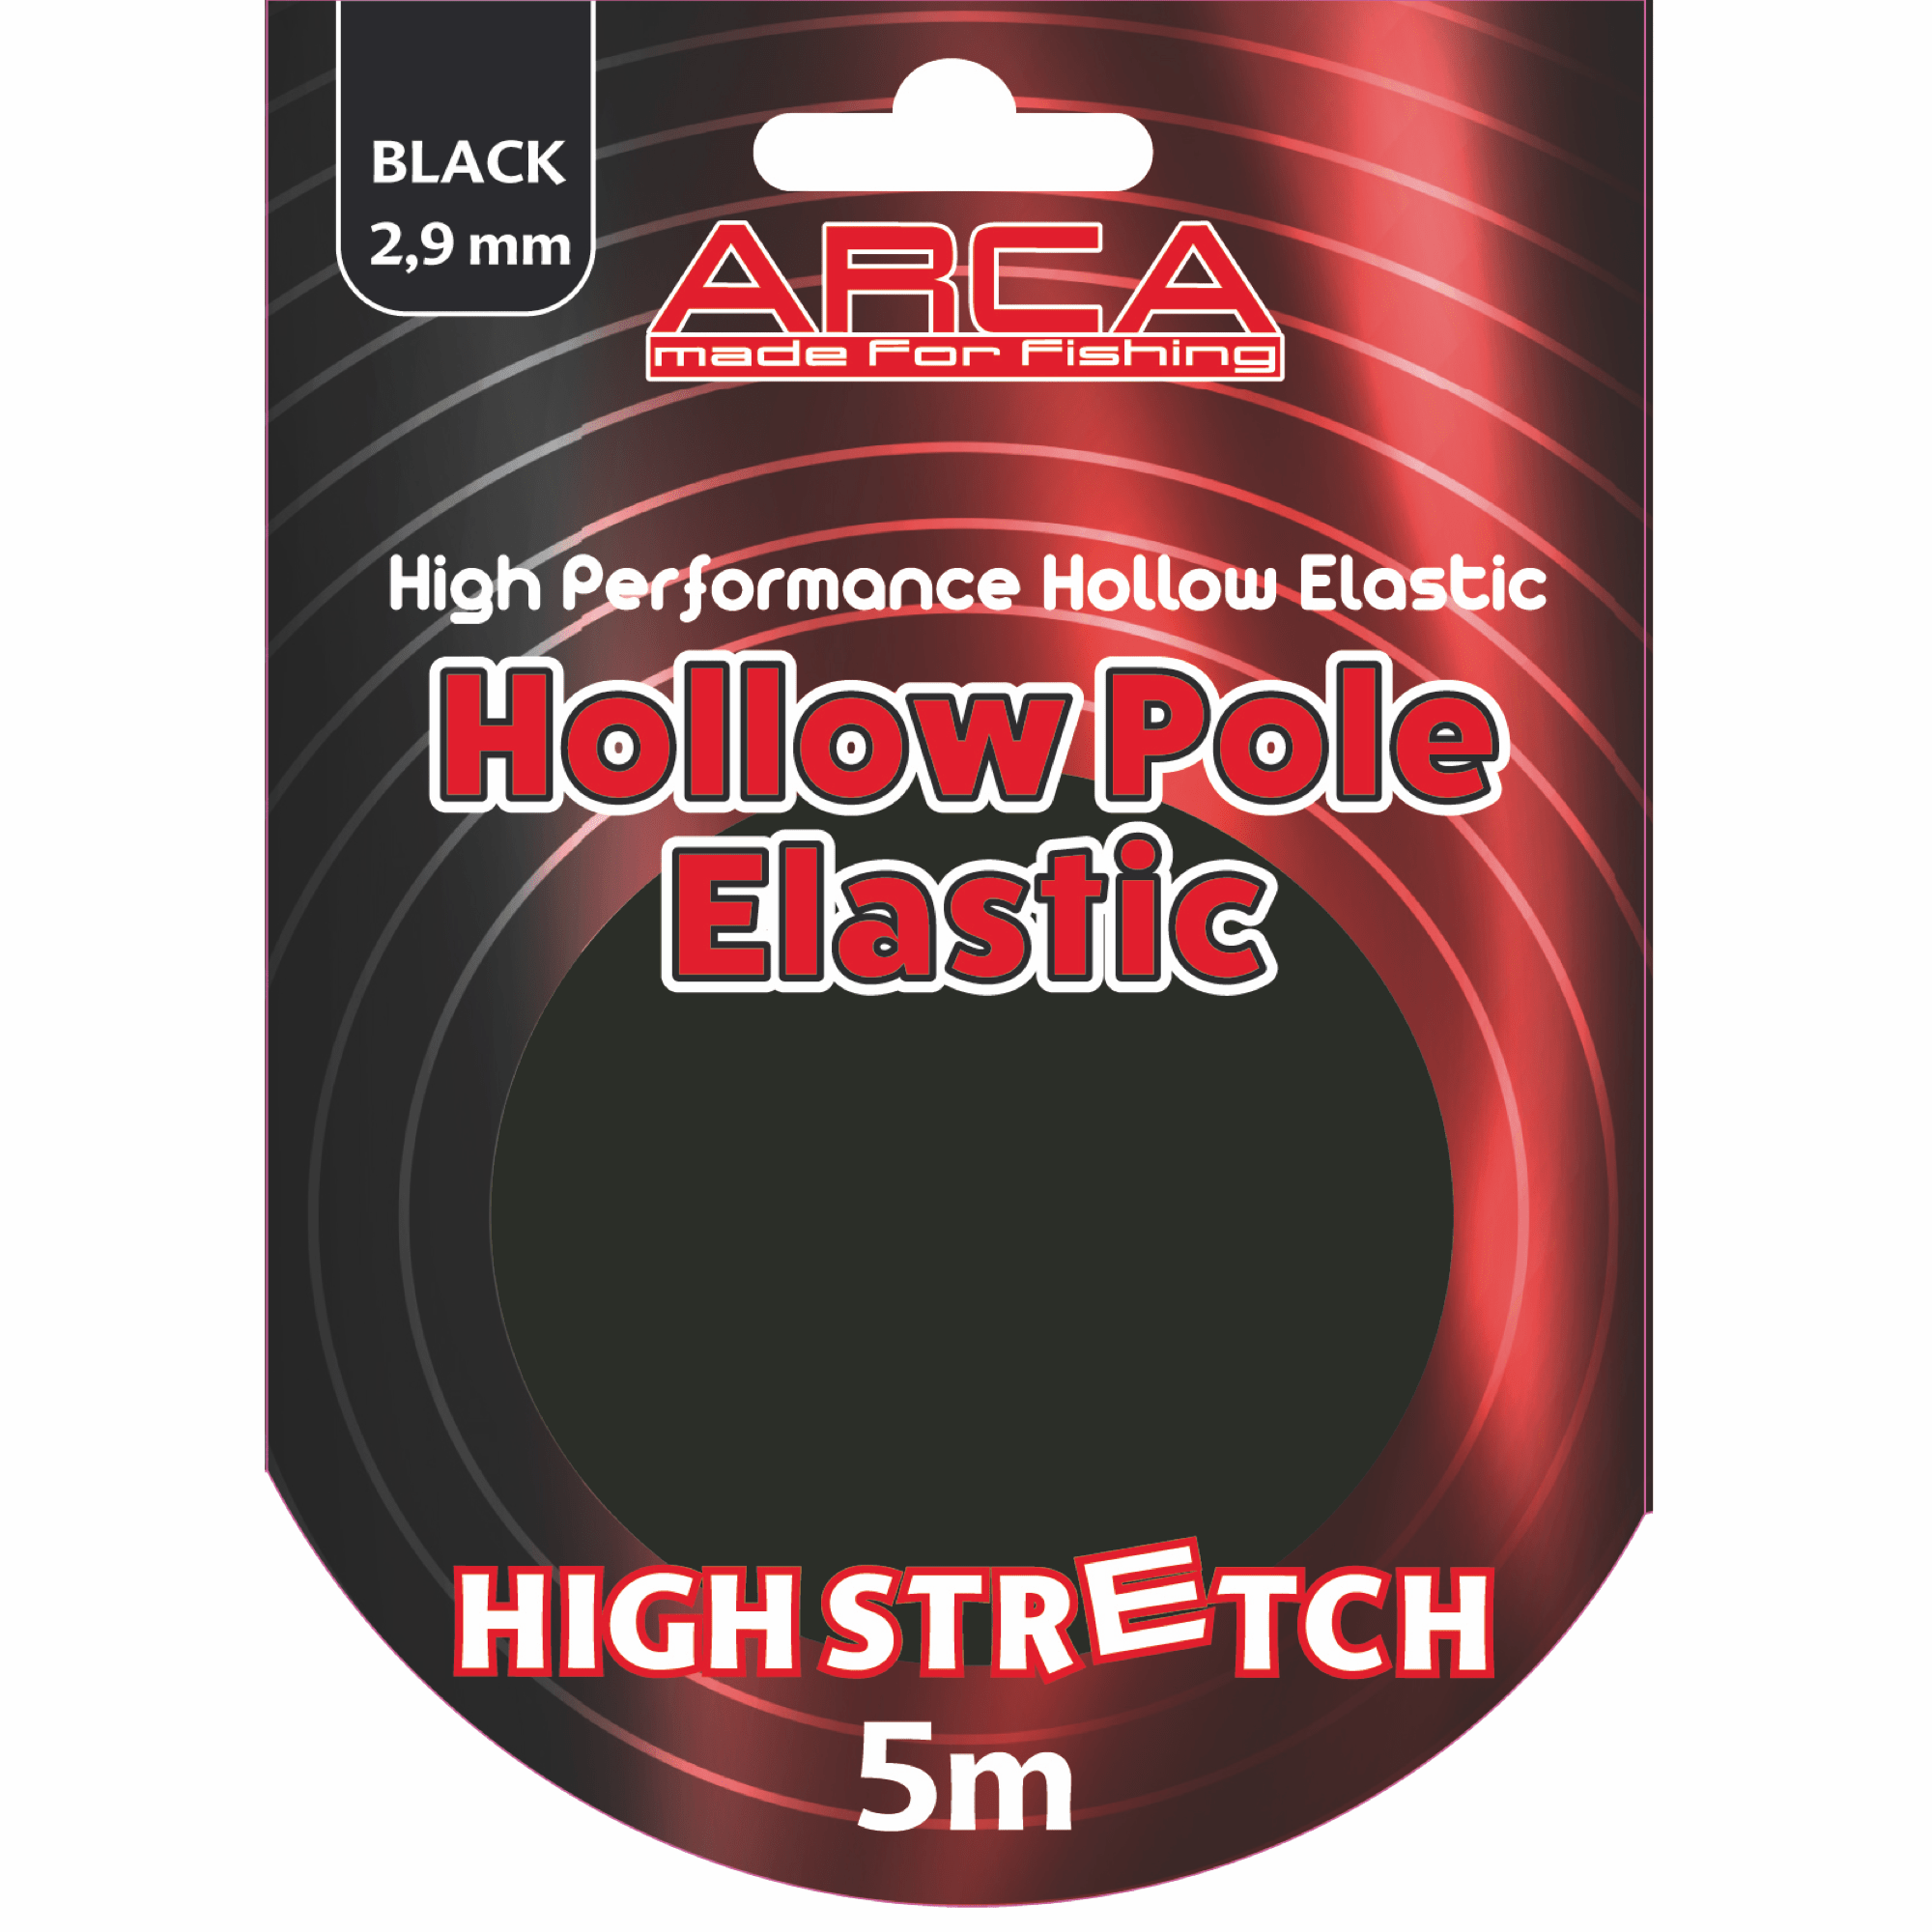 Arca hollow pole elastic